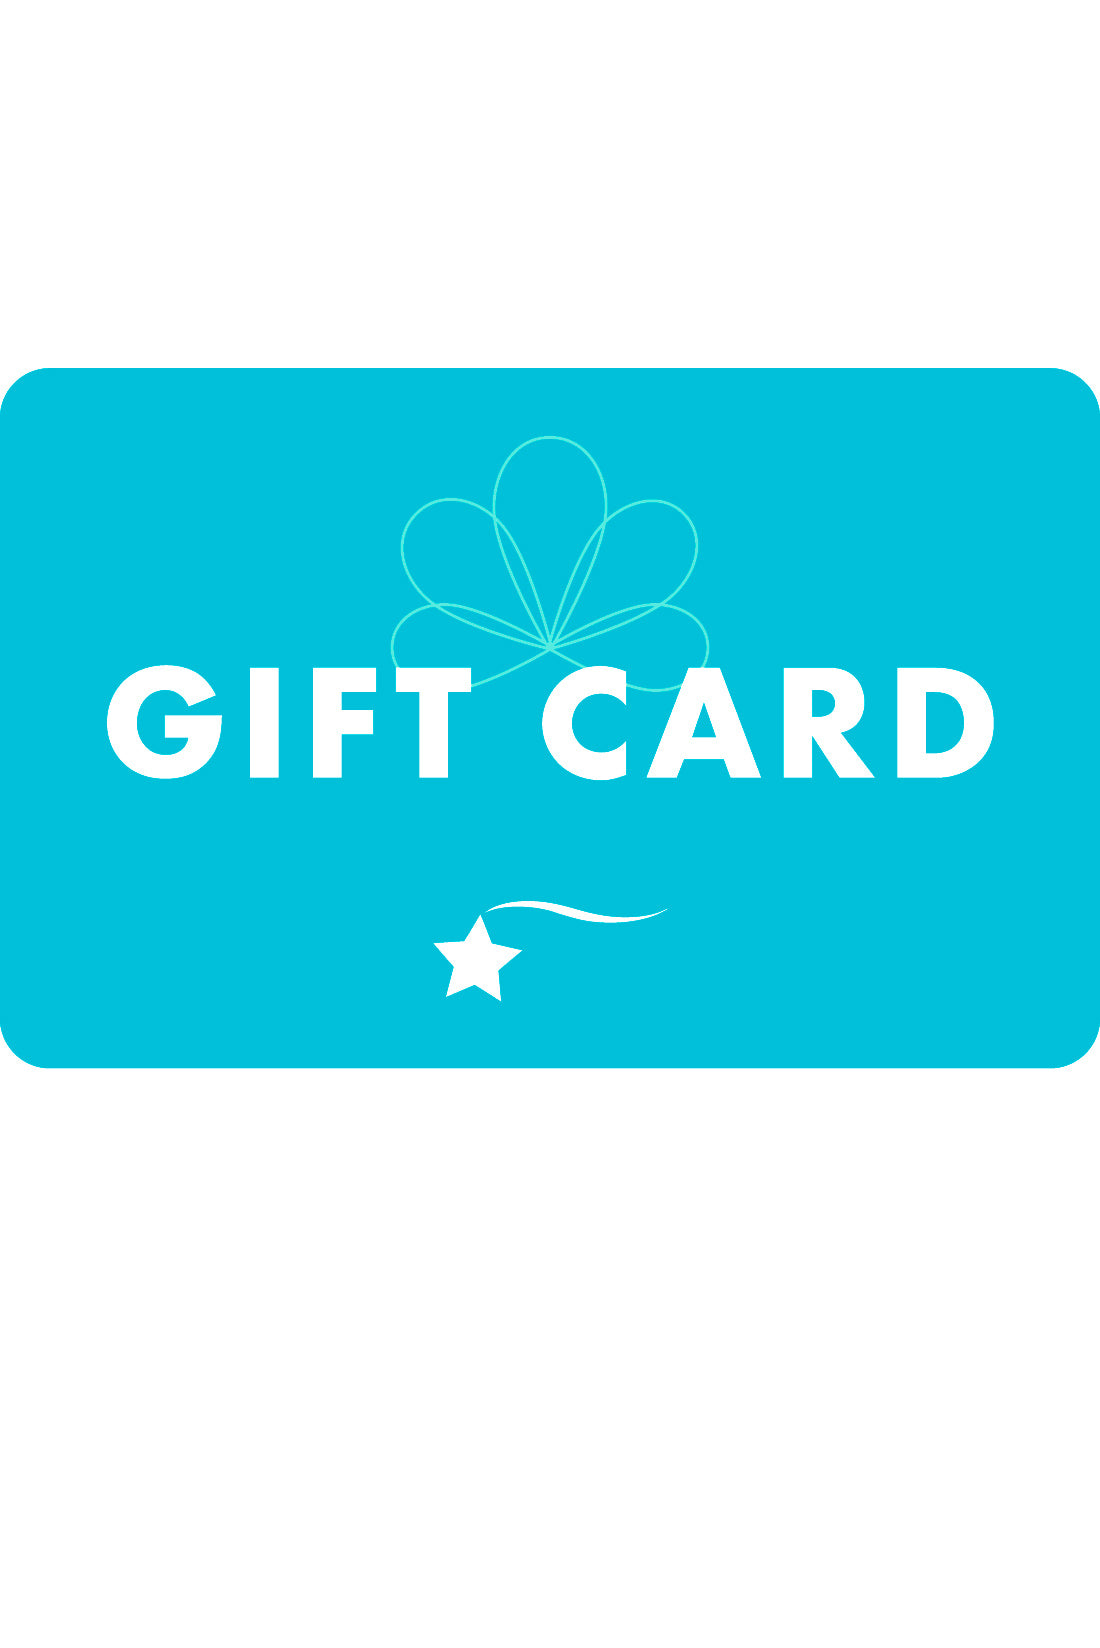 Gift cards for gymnastics apparel and accessories, Destira, 2023